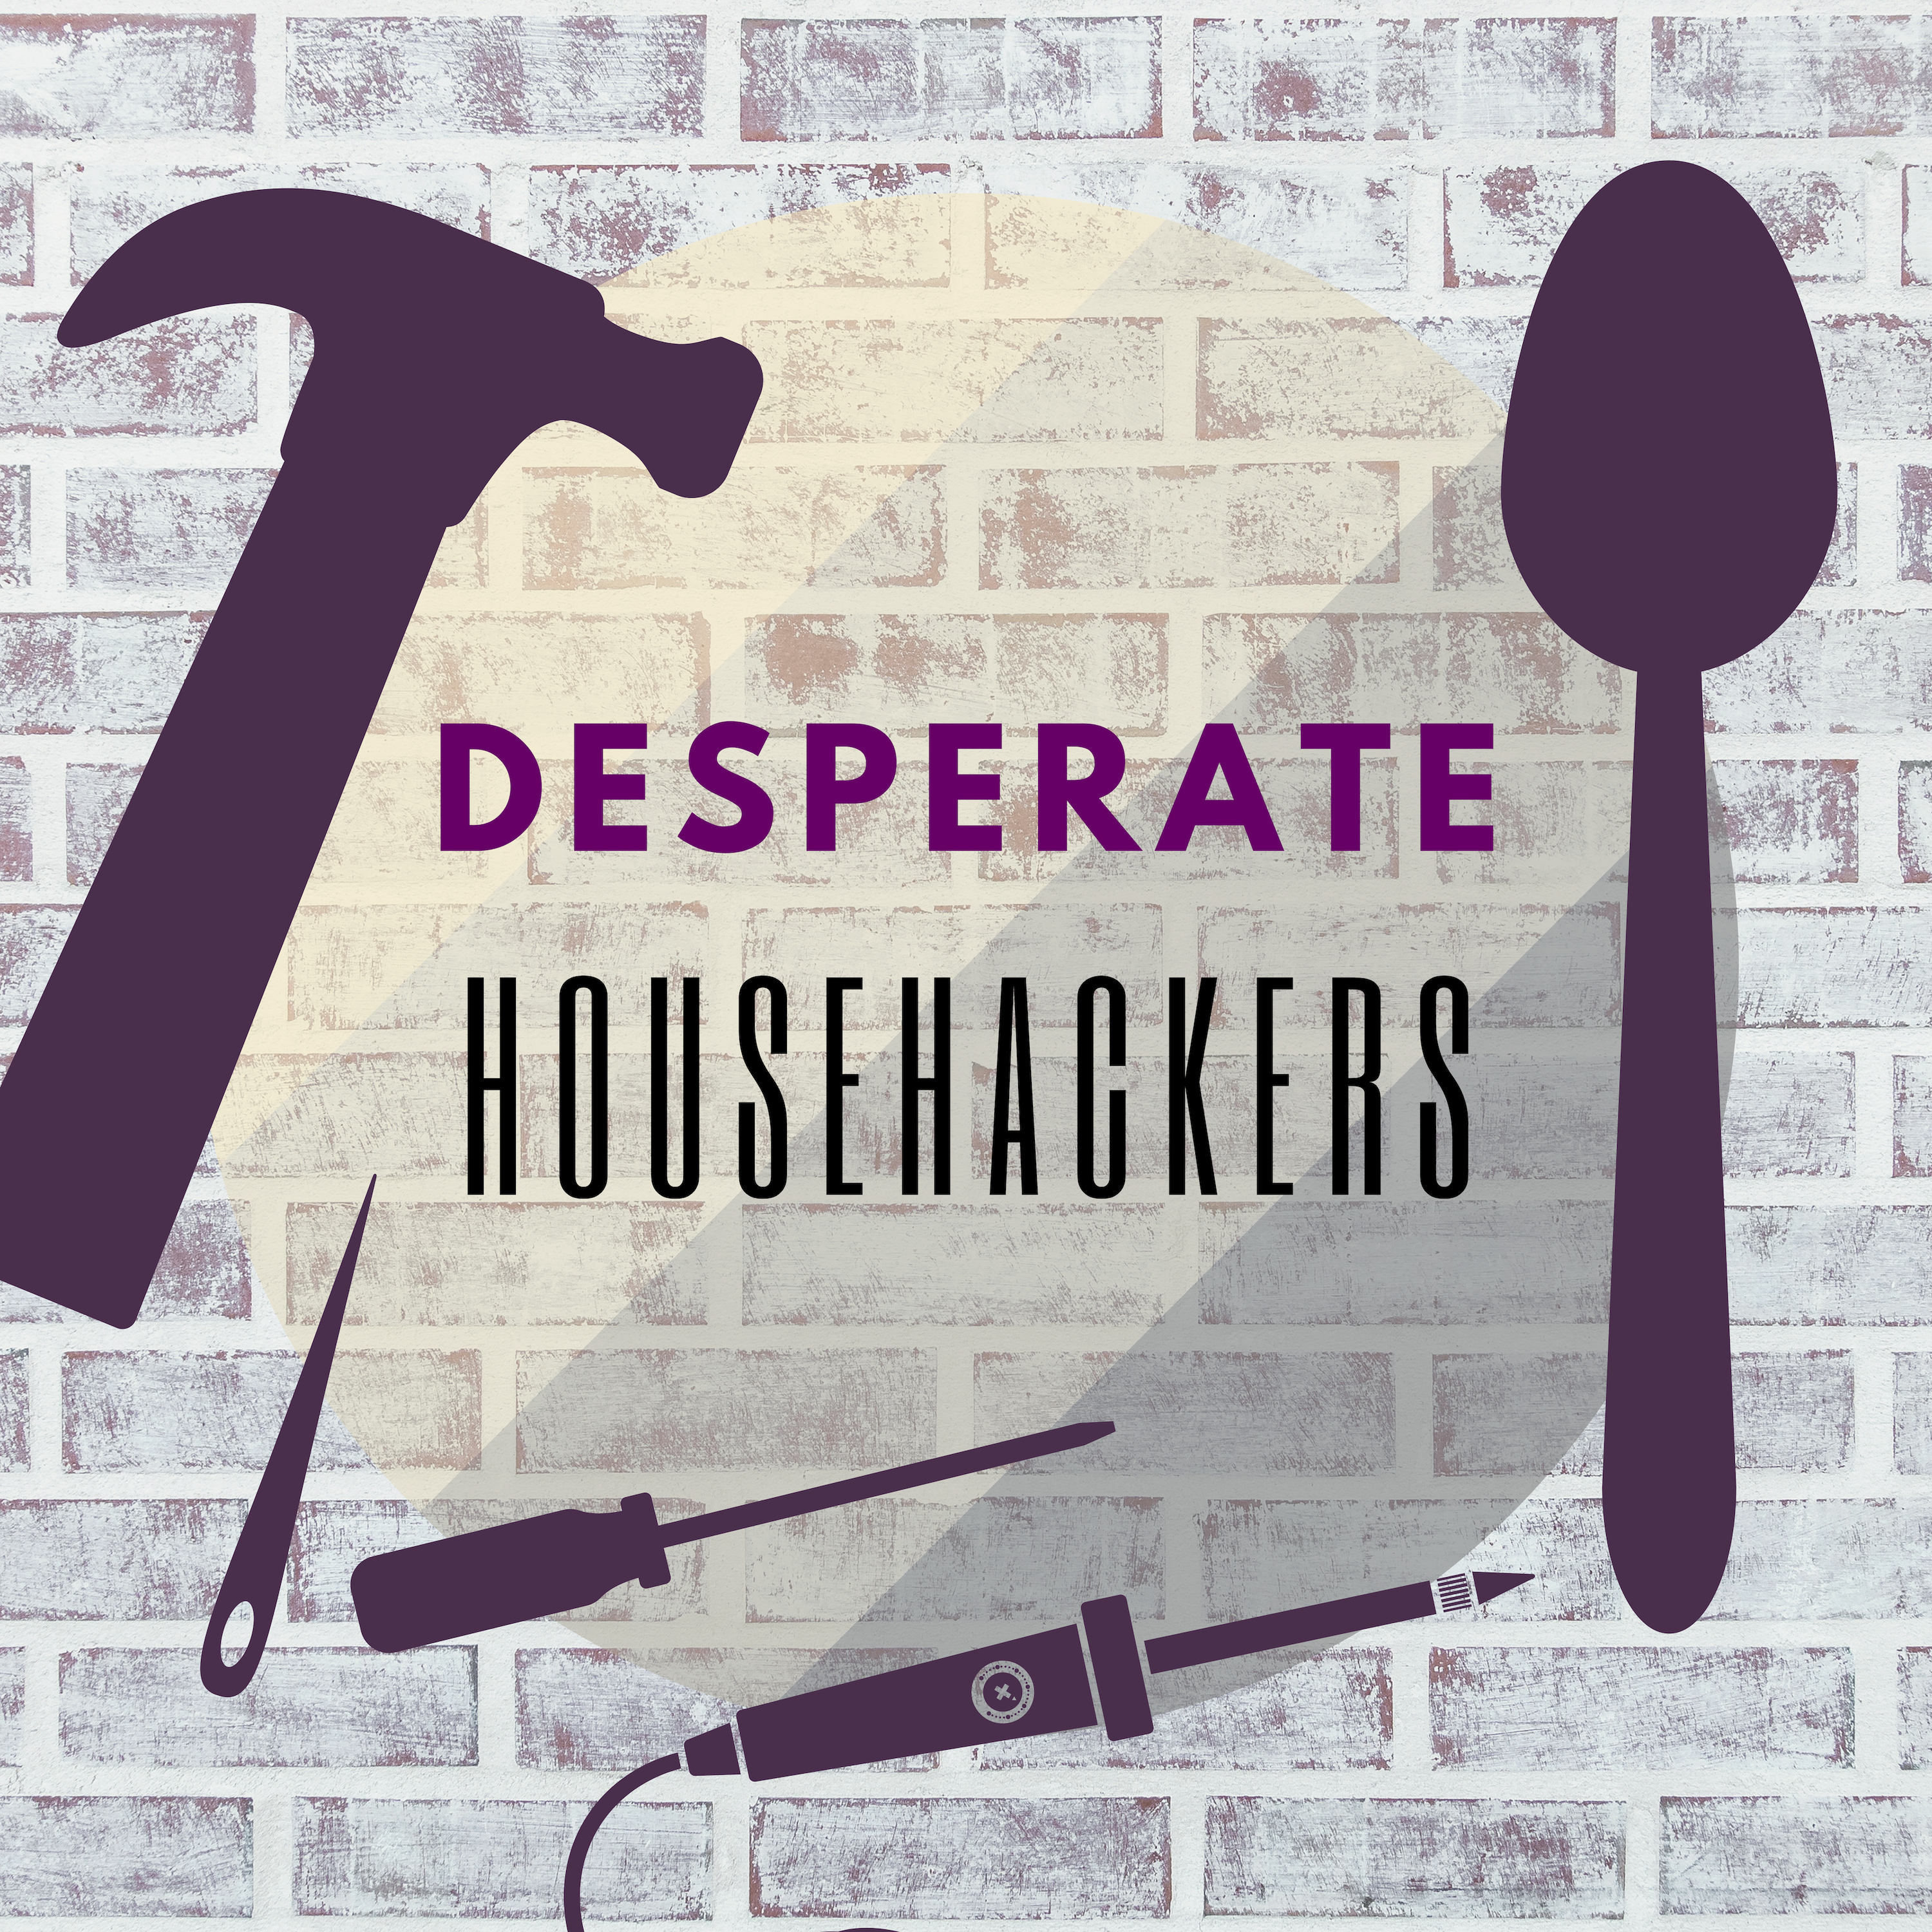 Desperate Househackers